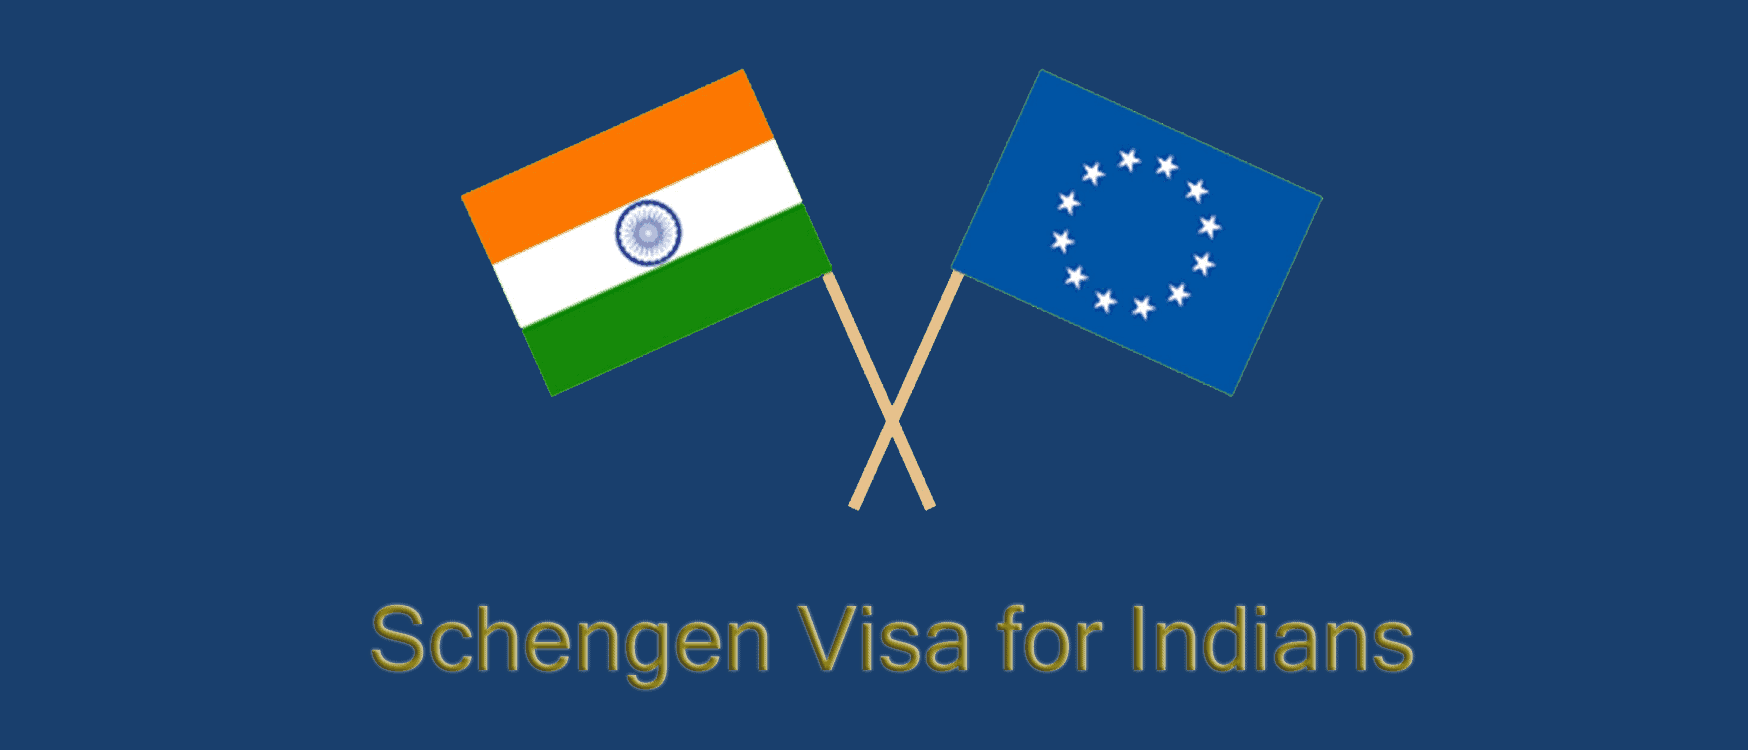 Get Schengen Visa from India to Experience Europe